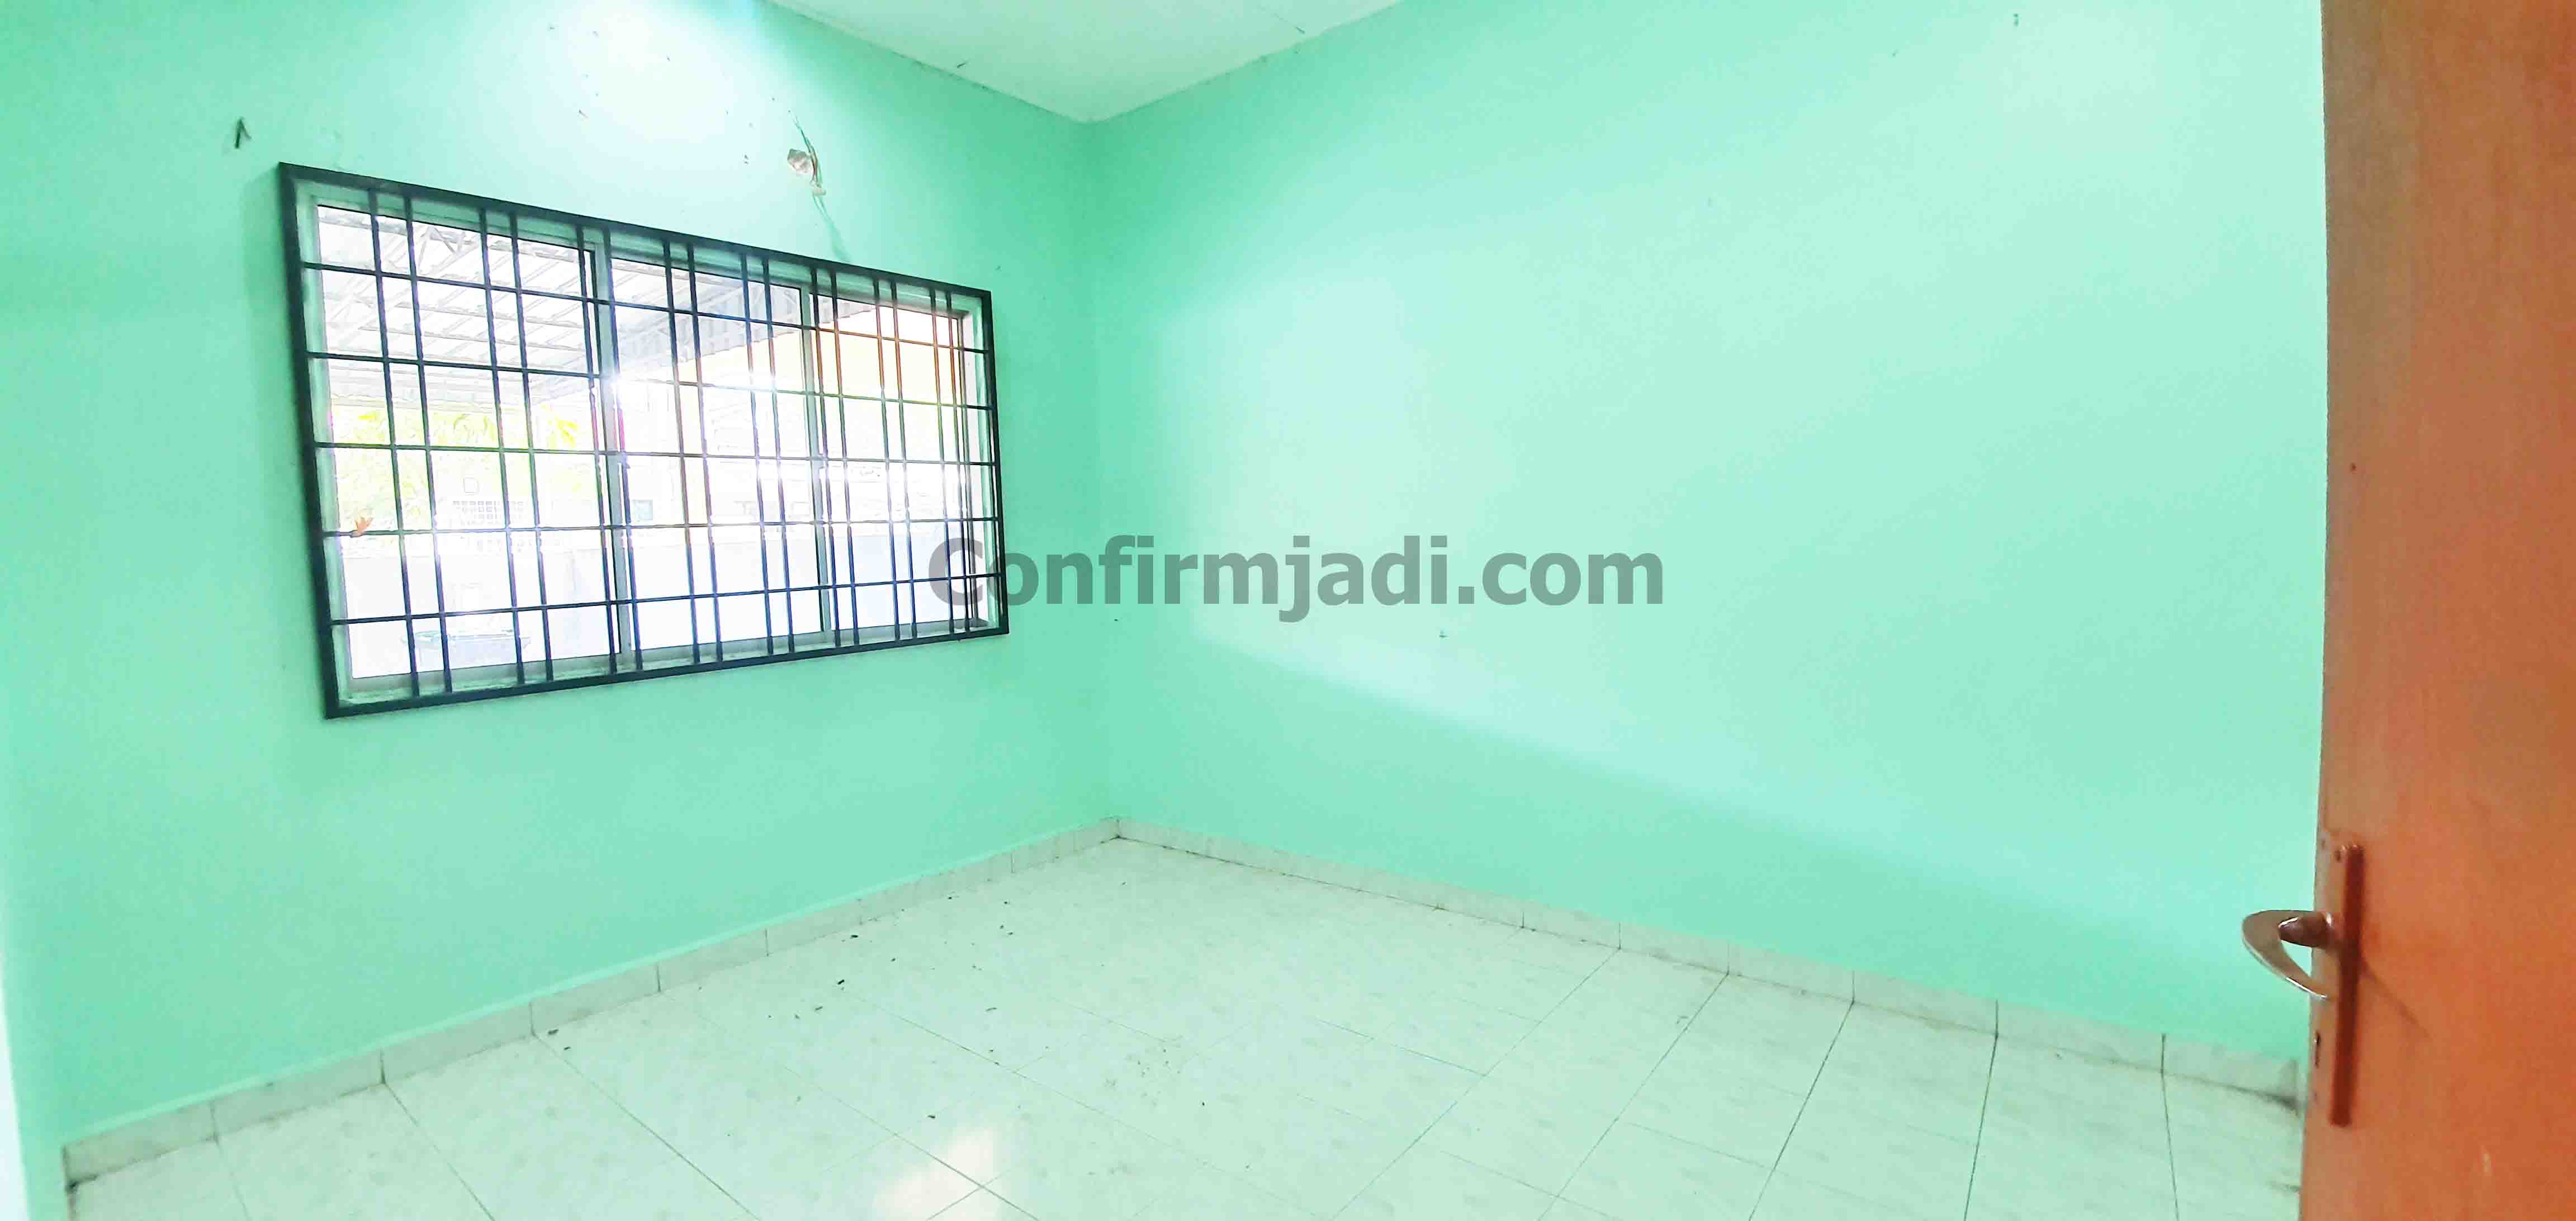 Single storey house for sale in Seremban 2 | ConfirmJadi.com